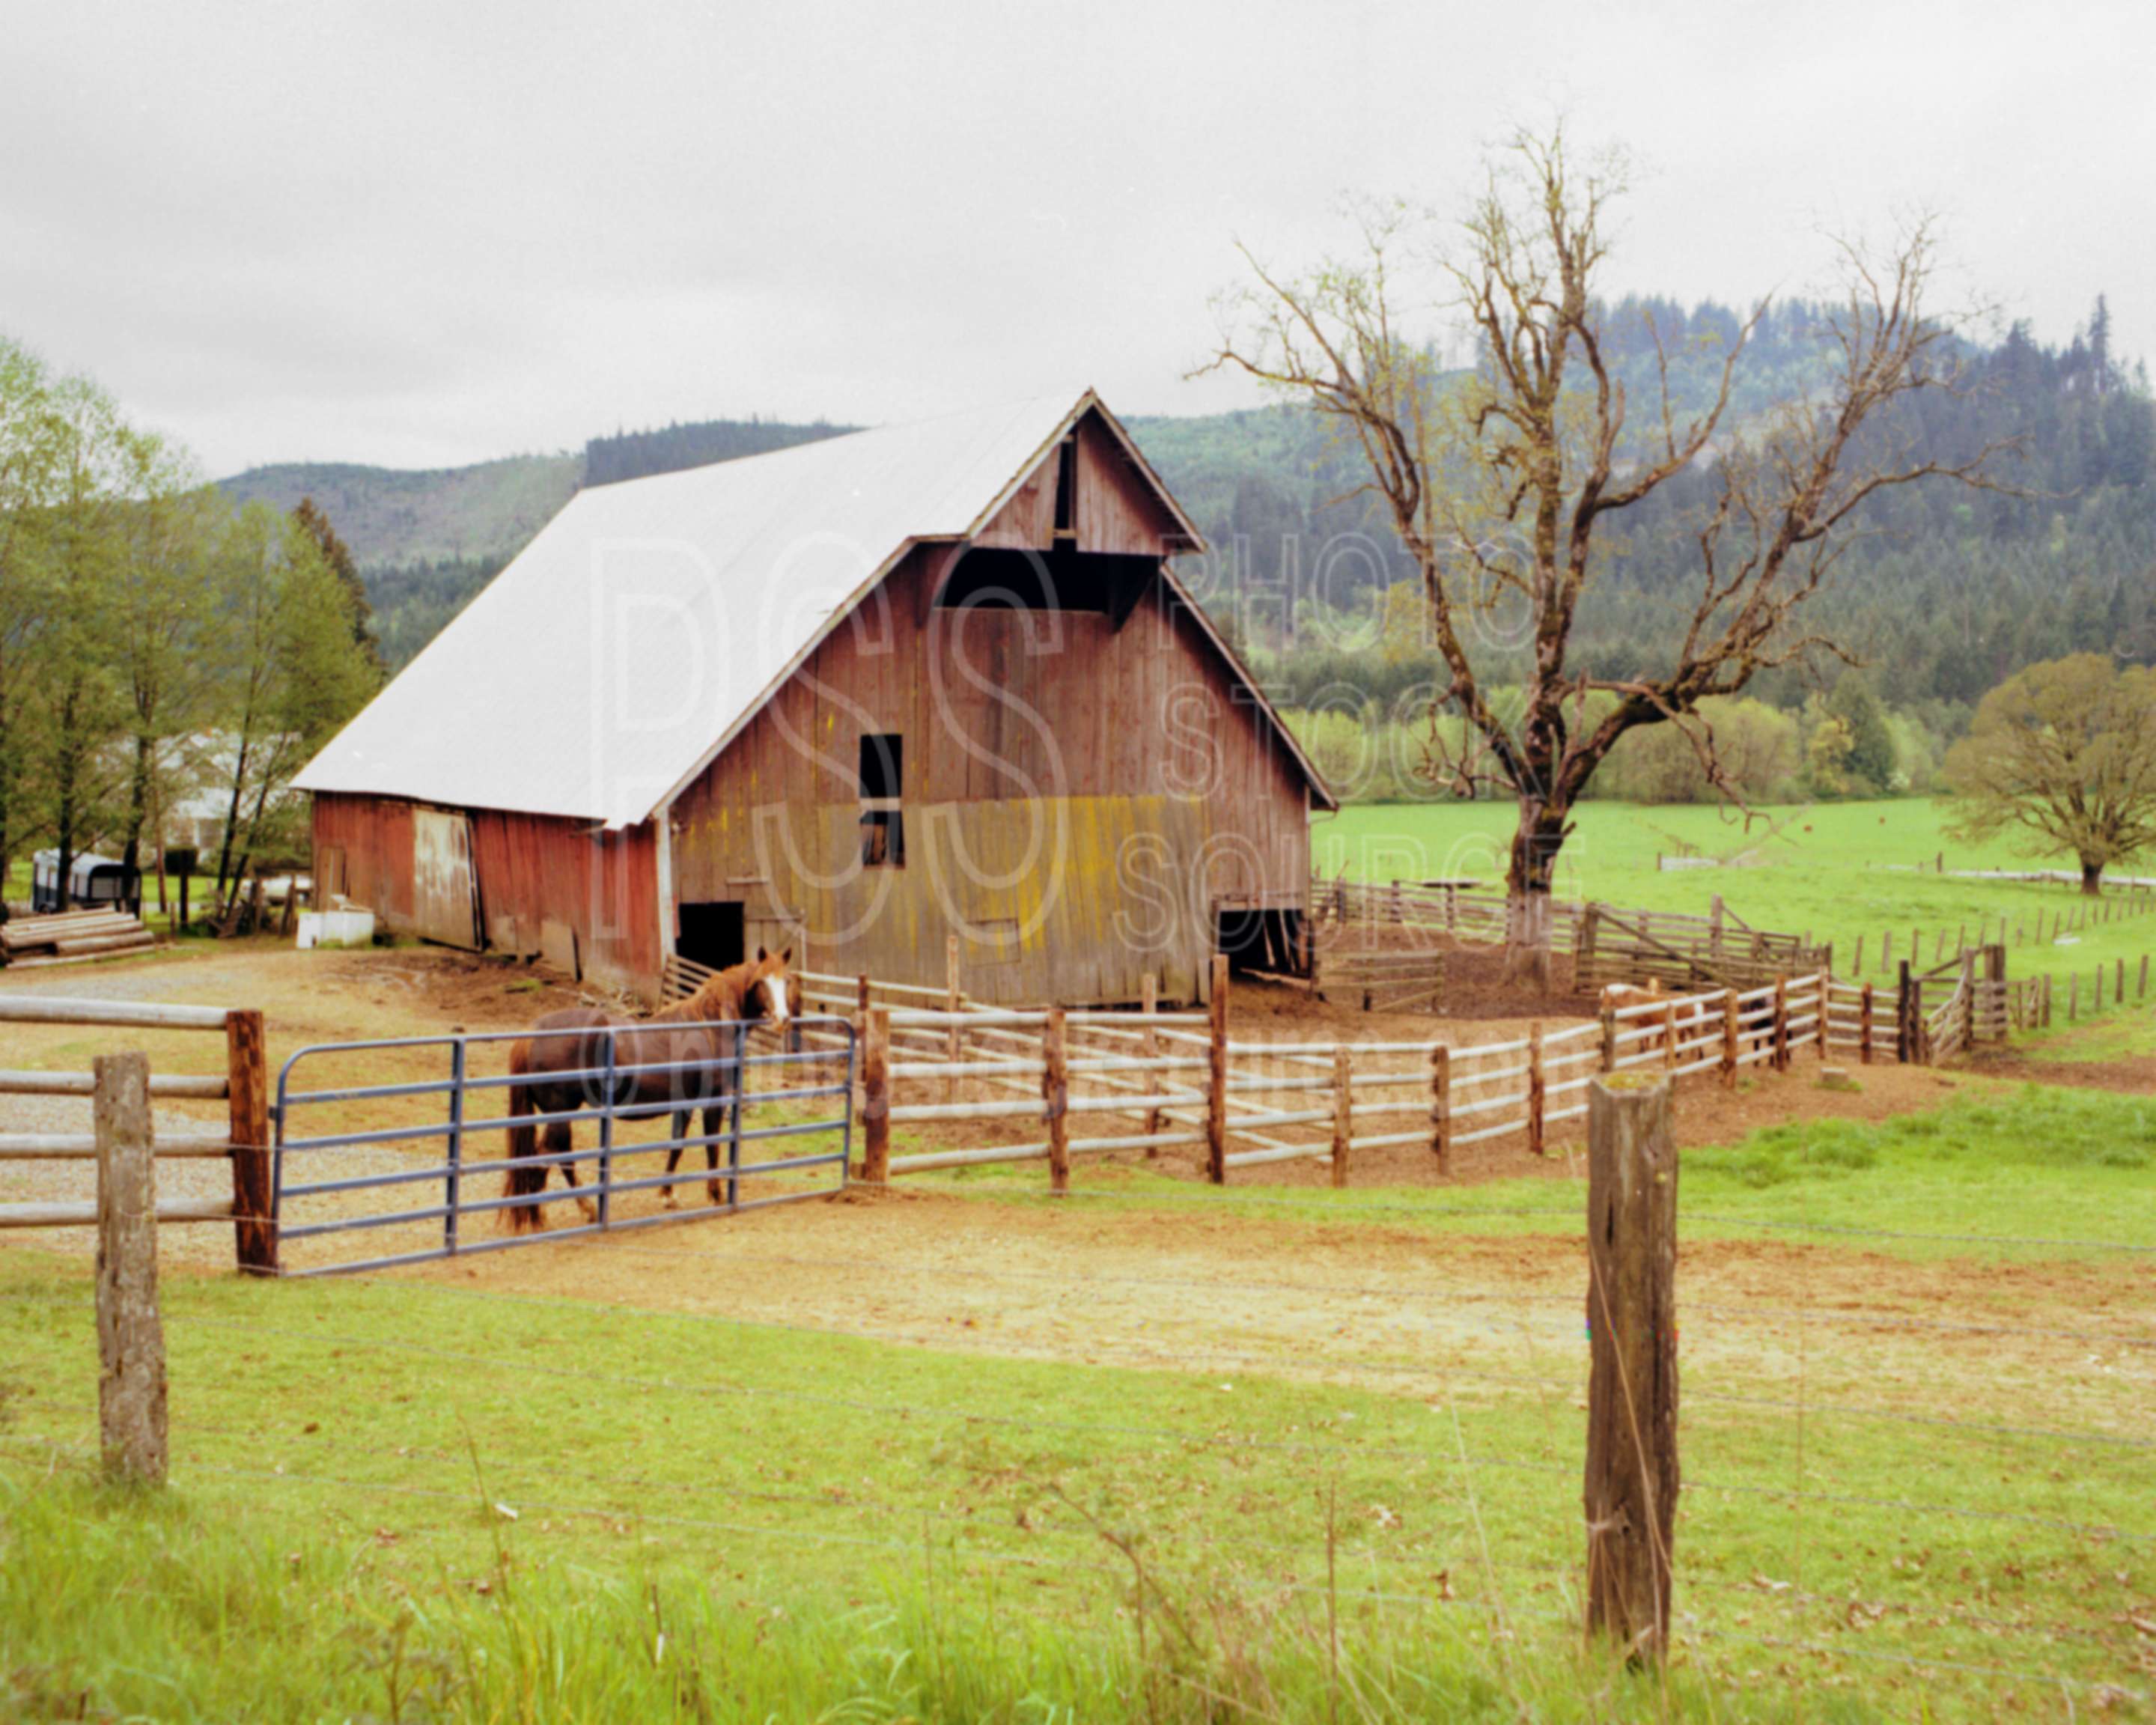 Horse and Barn,barn,building,fence,horse,oaks,tree,usas,barns